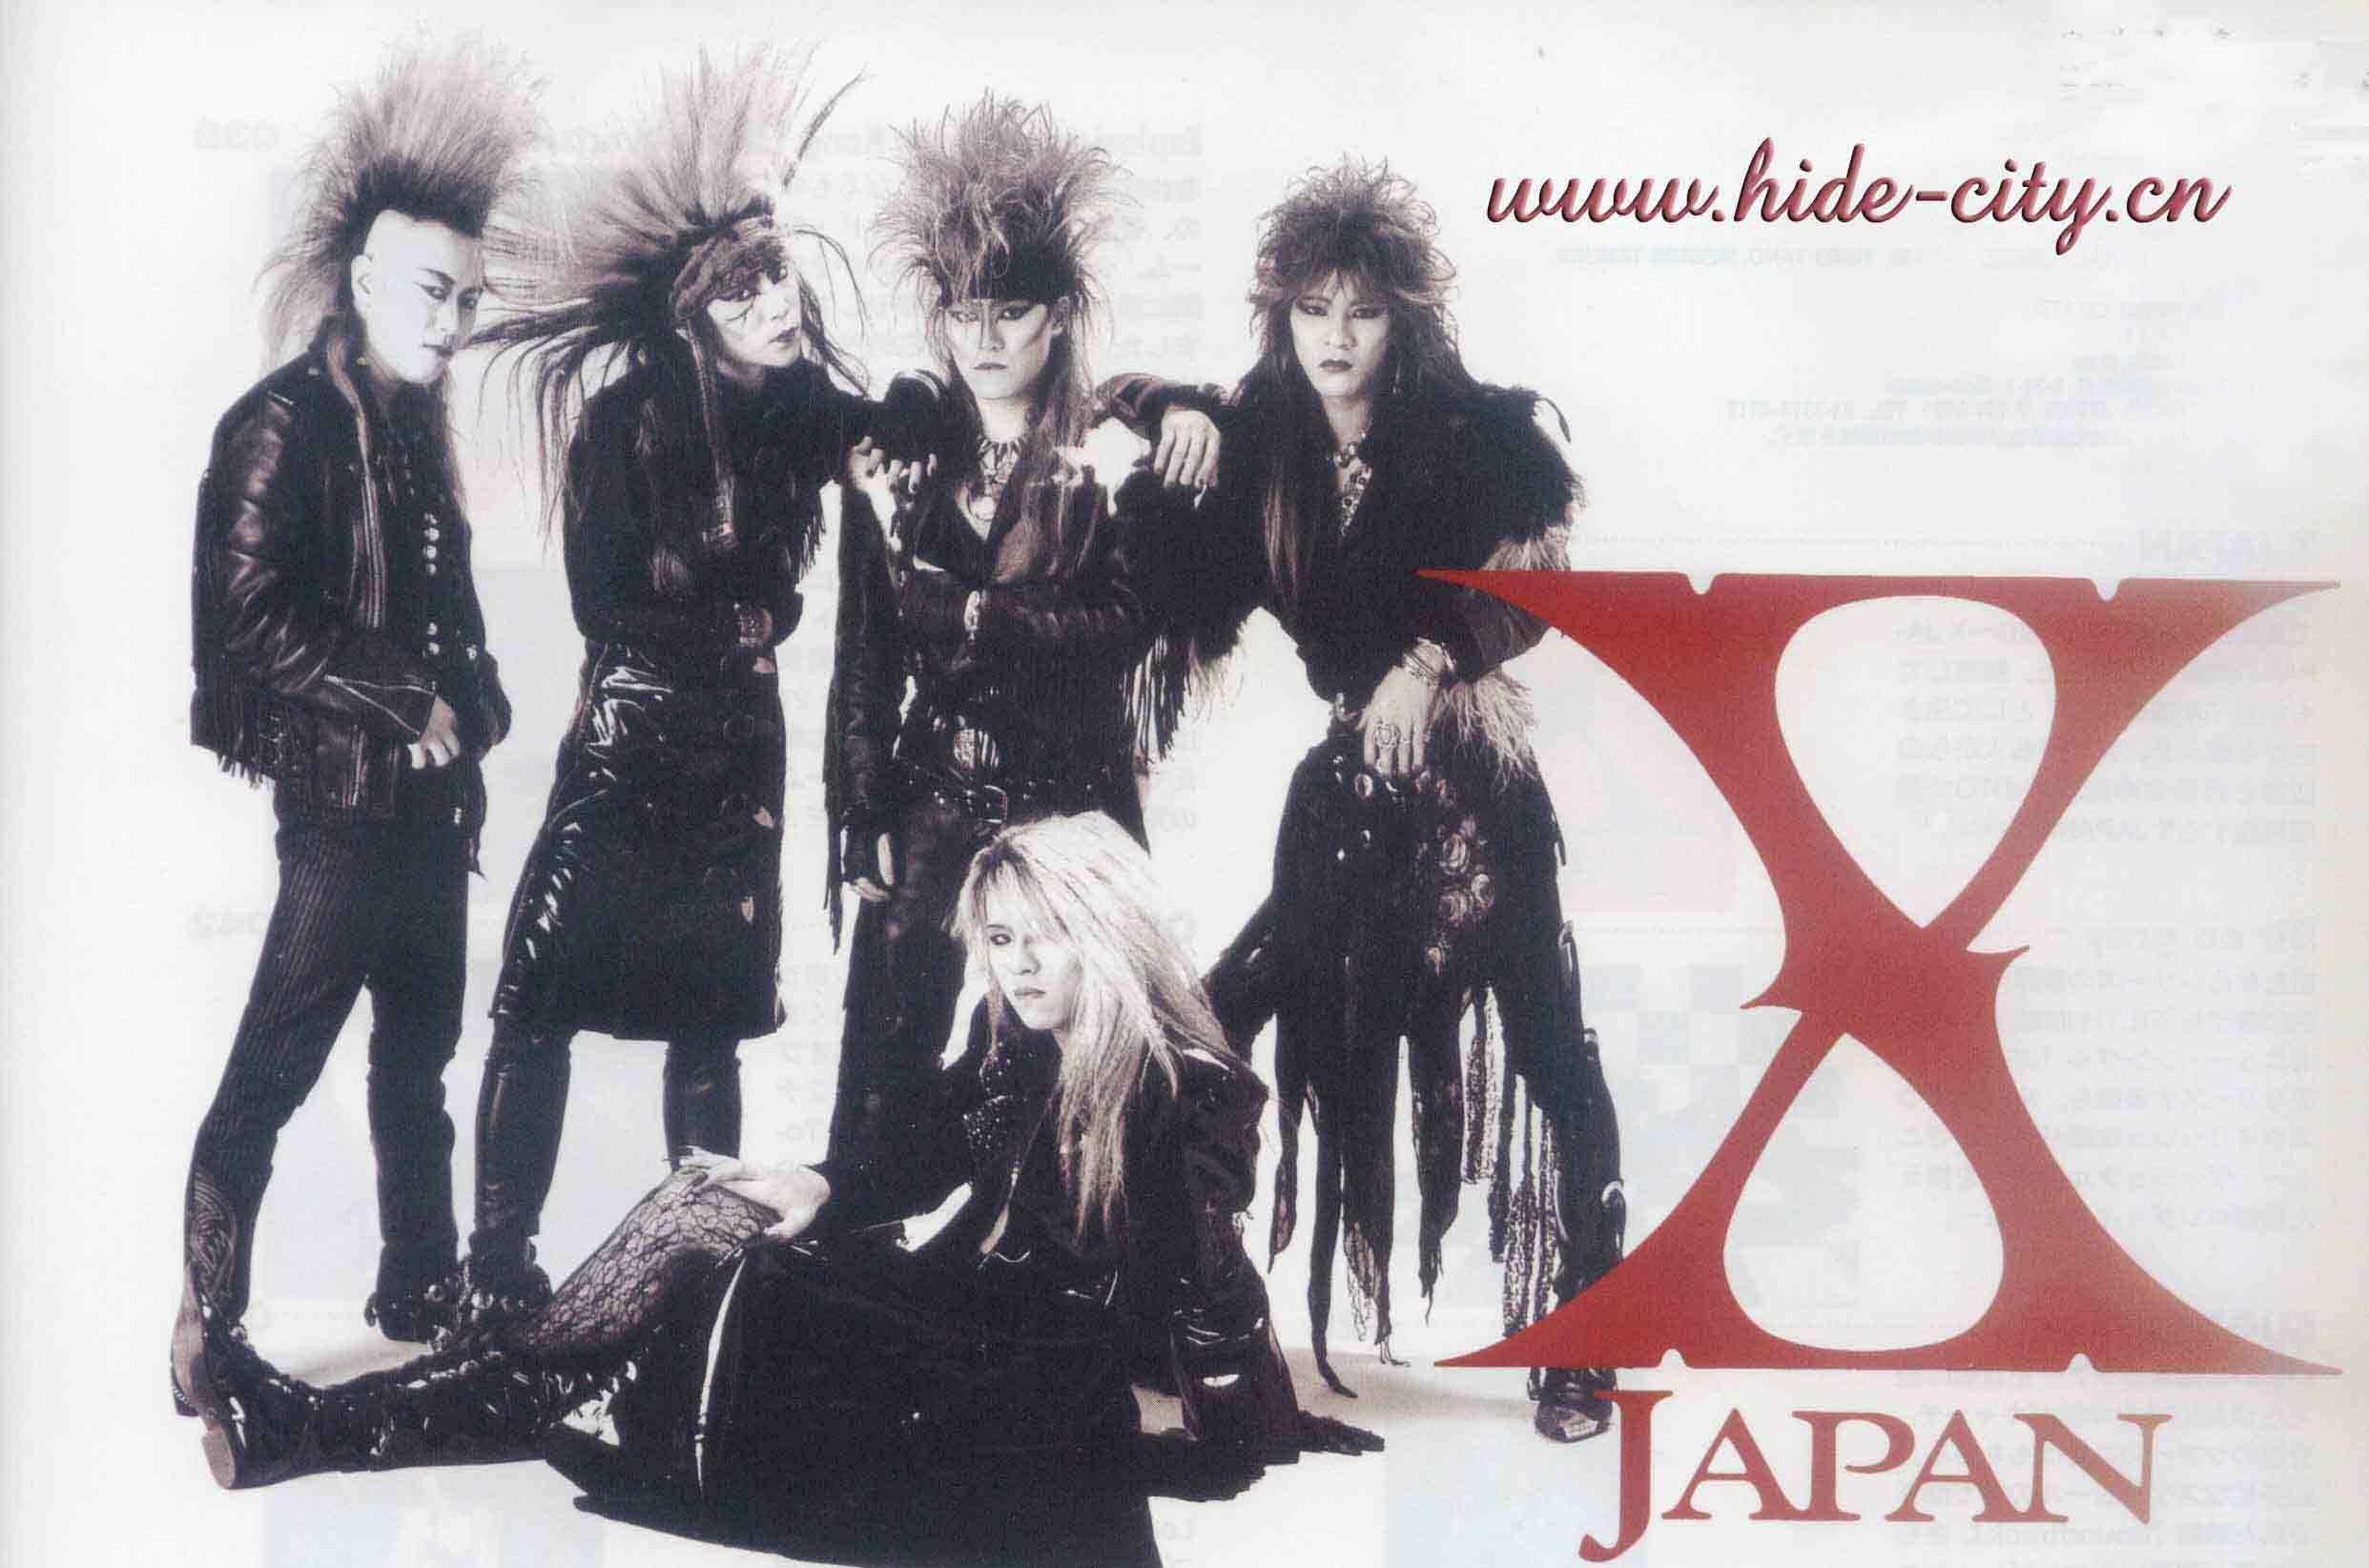 X Japan Wallpaper